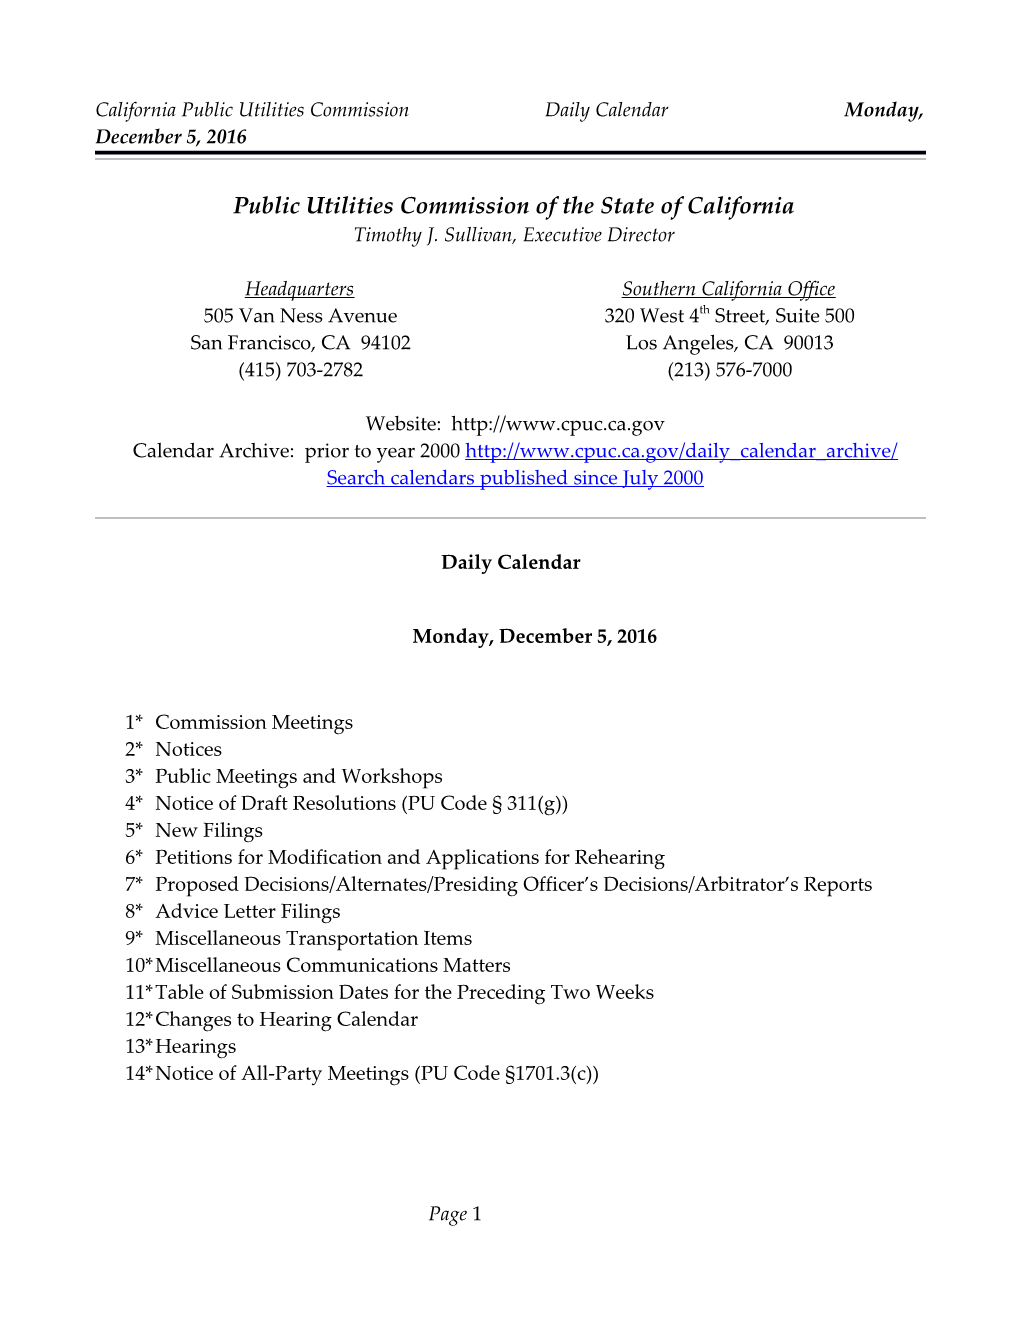 California Public Utilities Commission Daily Calendar Monday, December 5, 2016